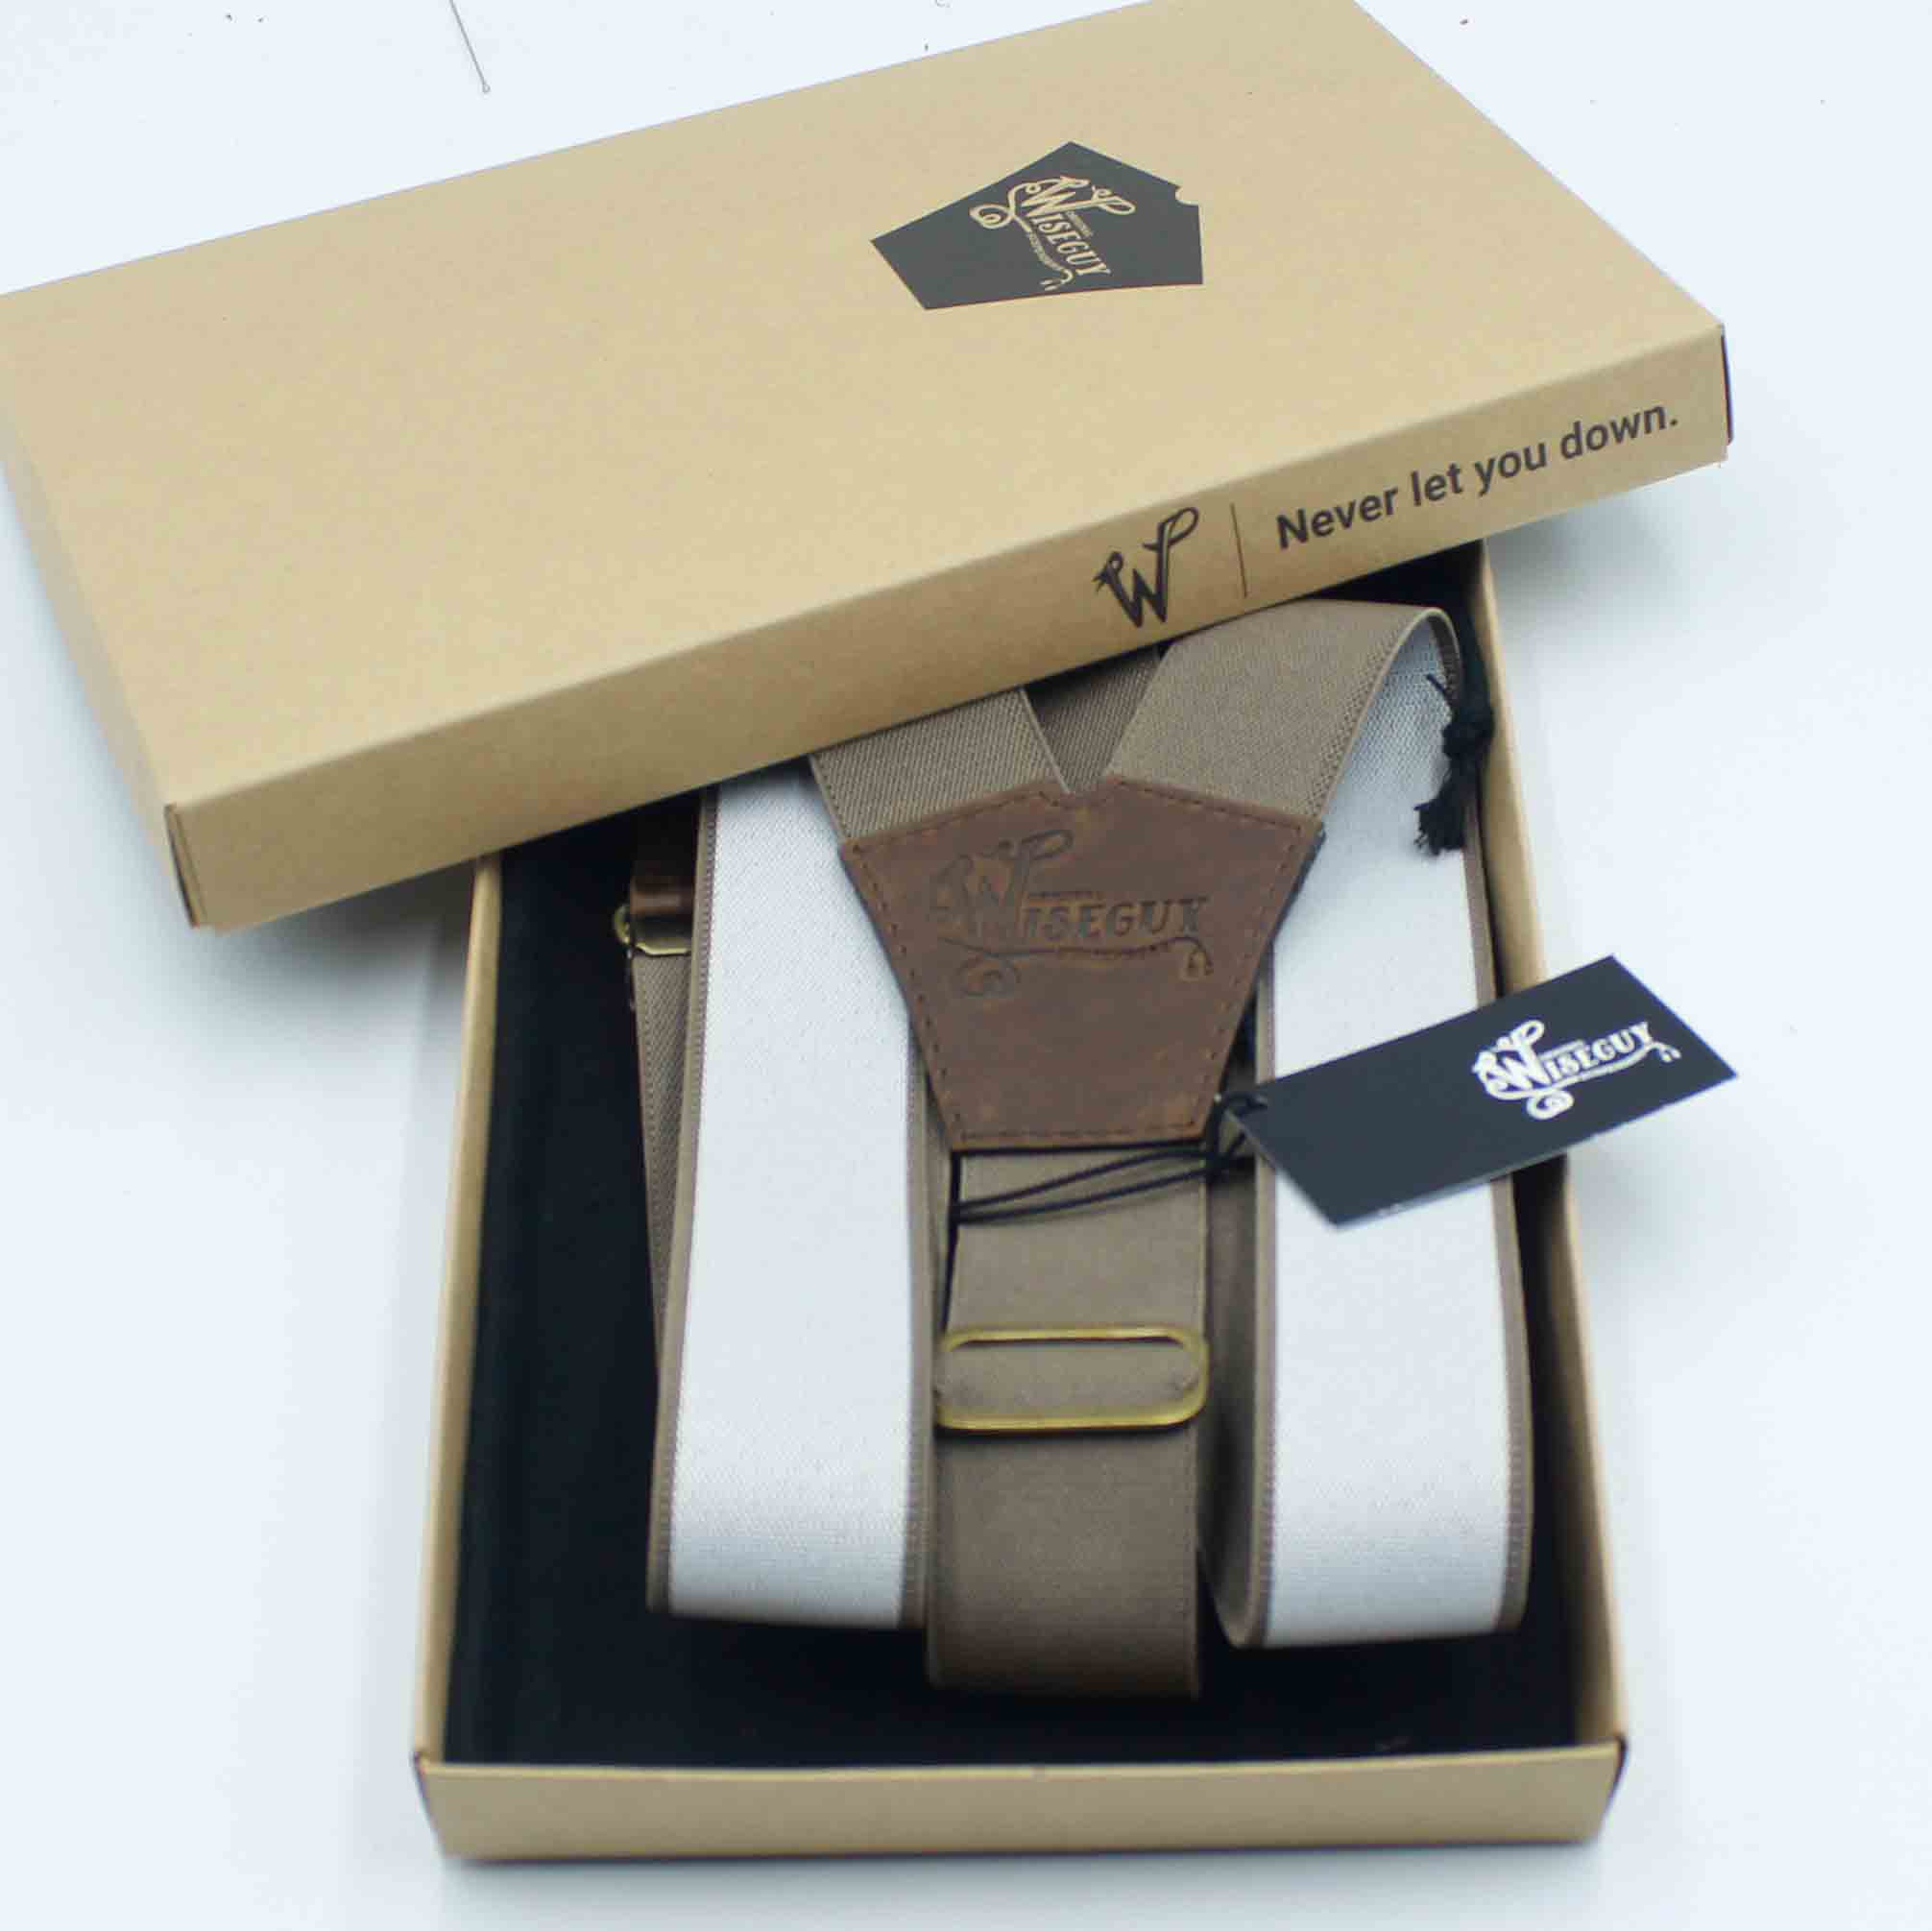 Smokey Beige on Dark Brown Suspenders wide straps (1.36 inch/ 3.5 cm) - Wiseguy Suspenders